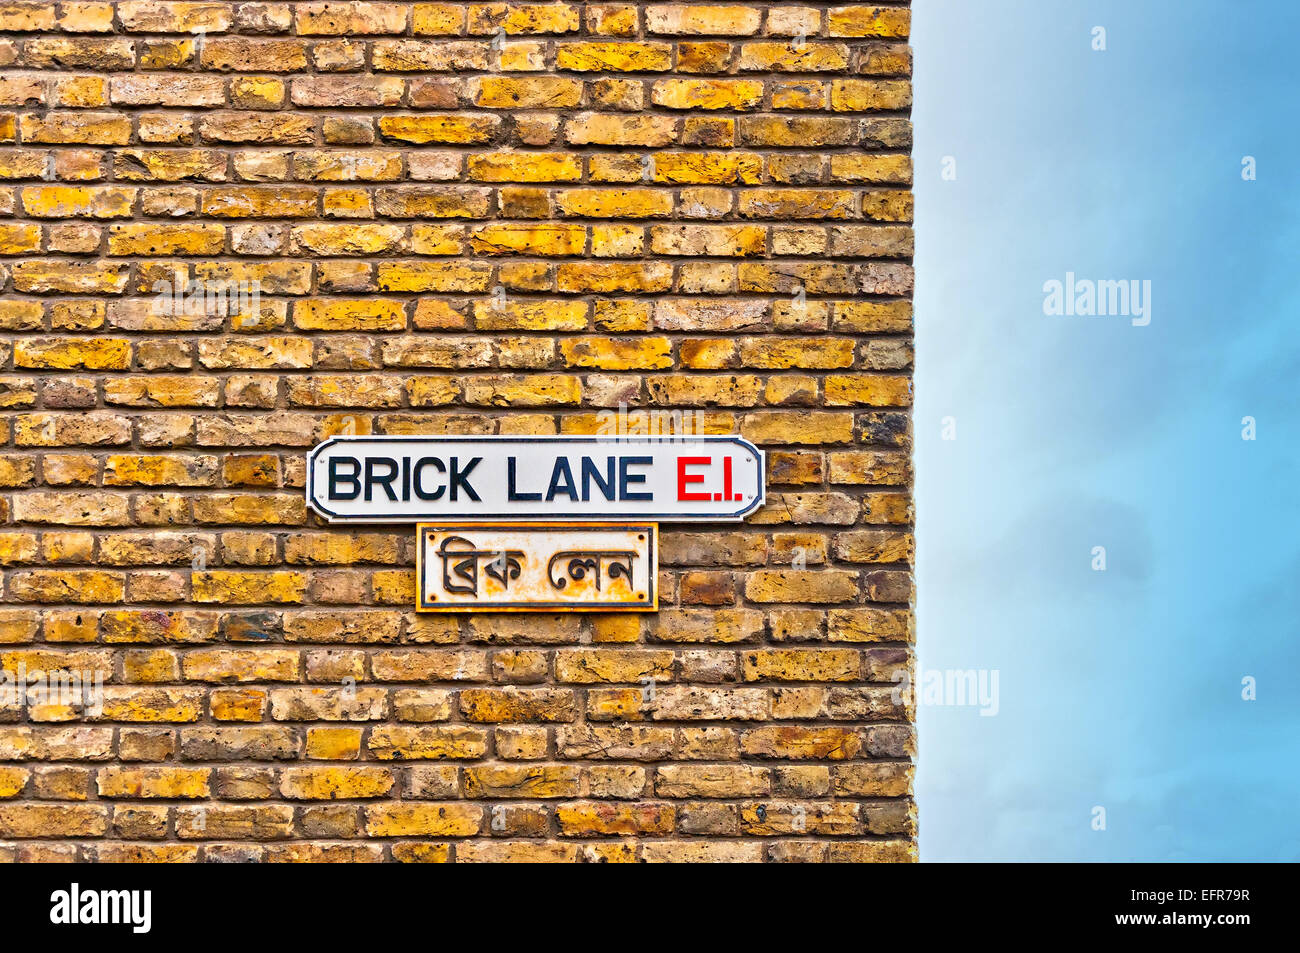 Brick Lane street sign in East End, Londres - Royaume-Uni Banque D'Images